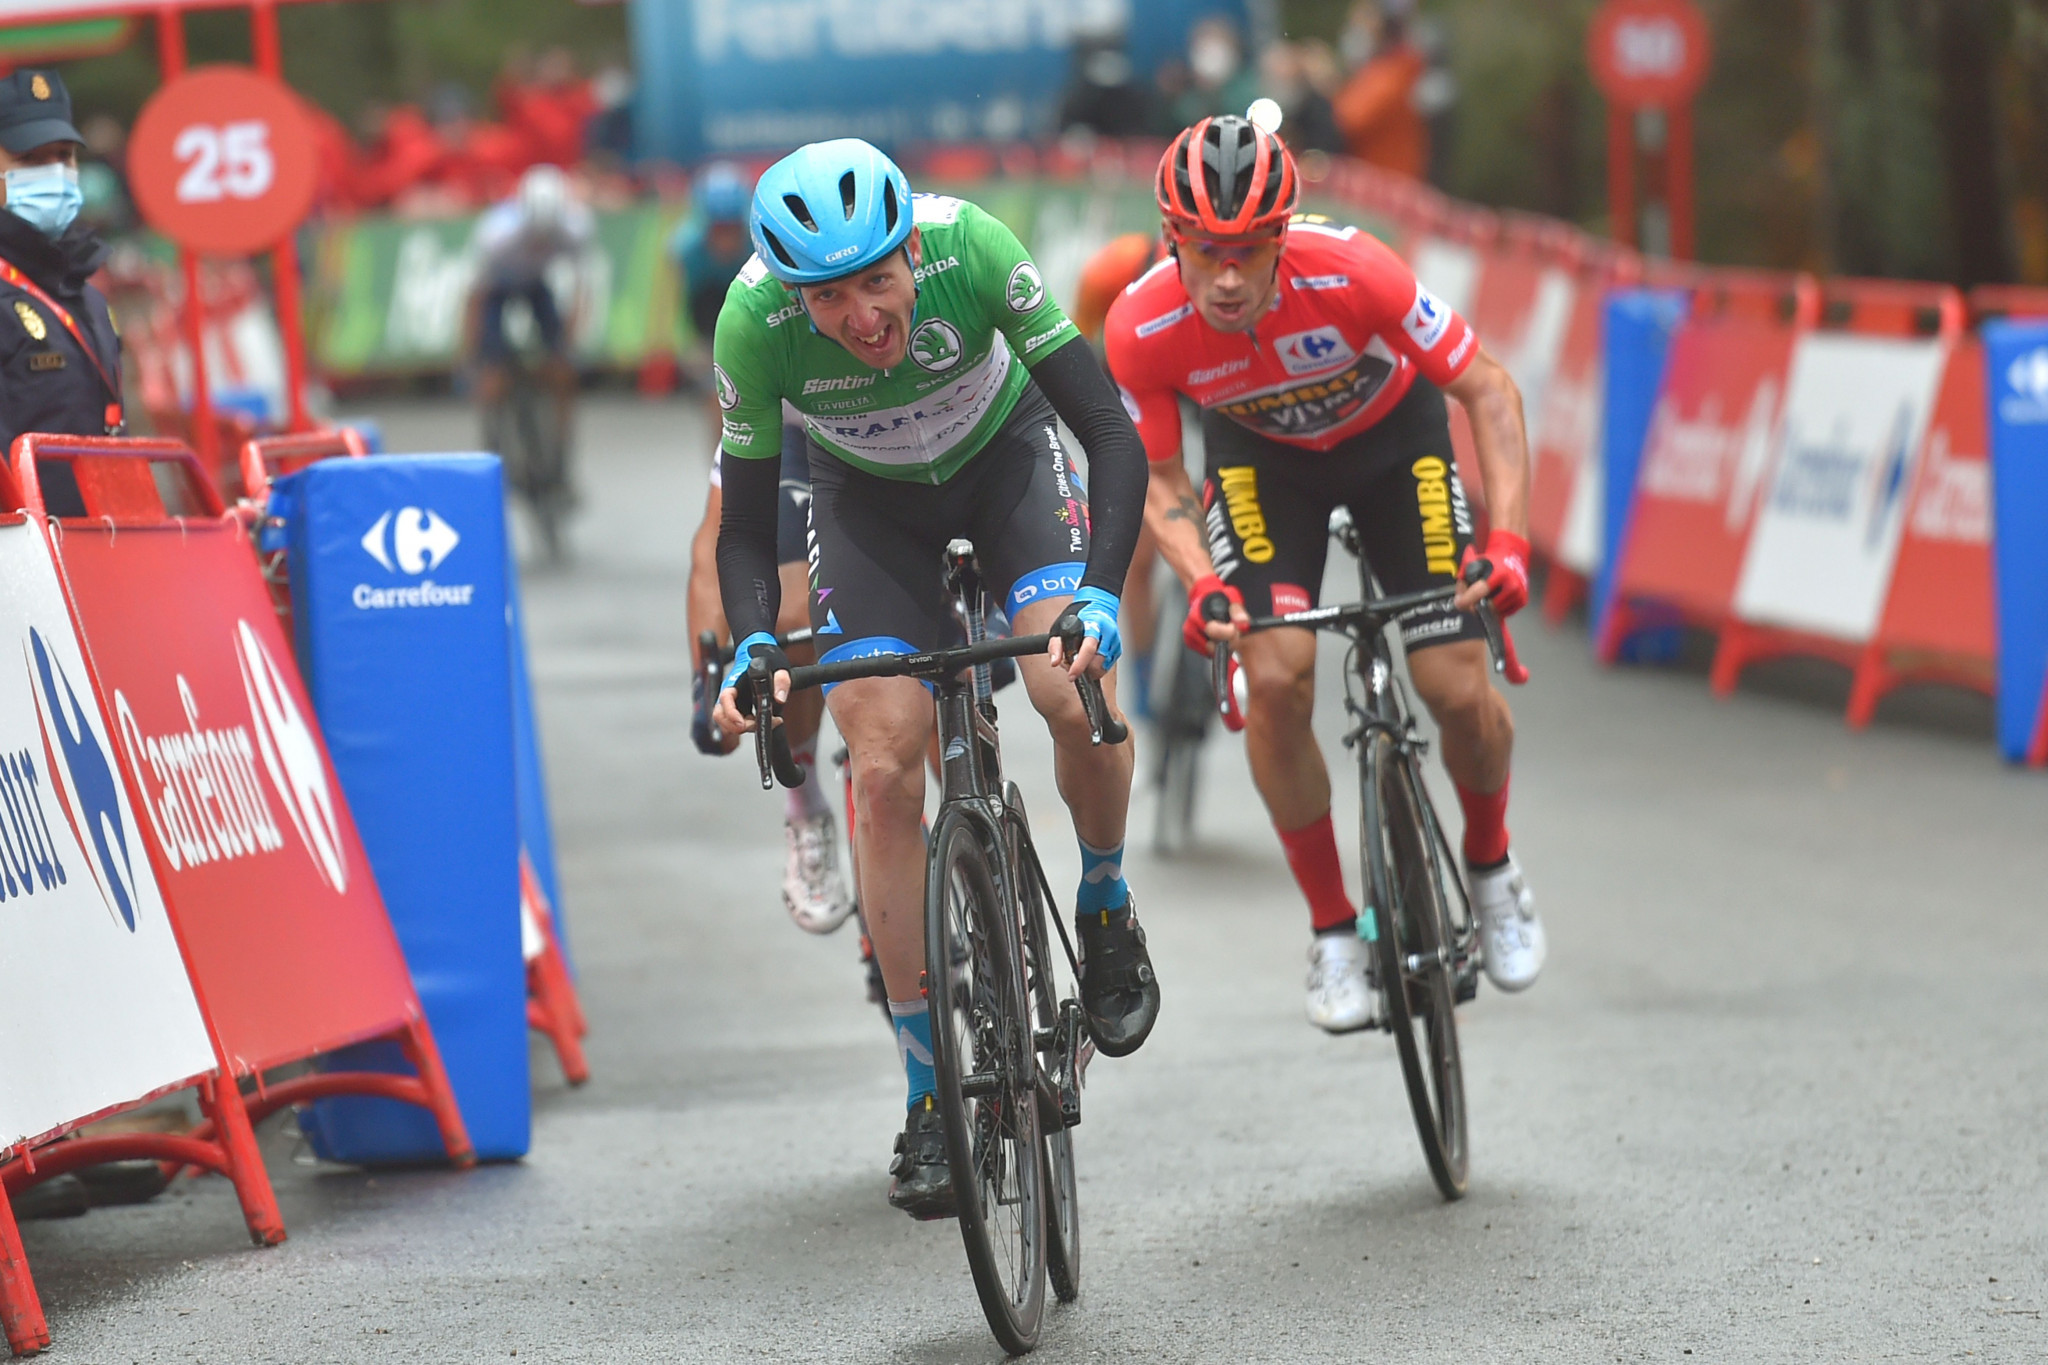 Ireland's Dan Martin won the third stage winner of the Vuelta a España ©Getty Images